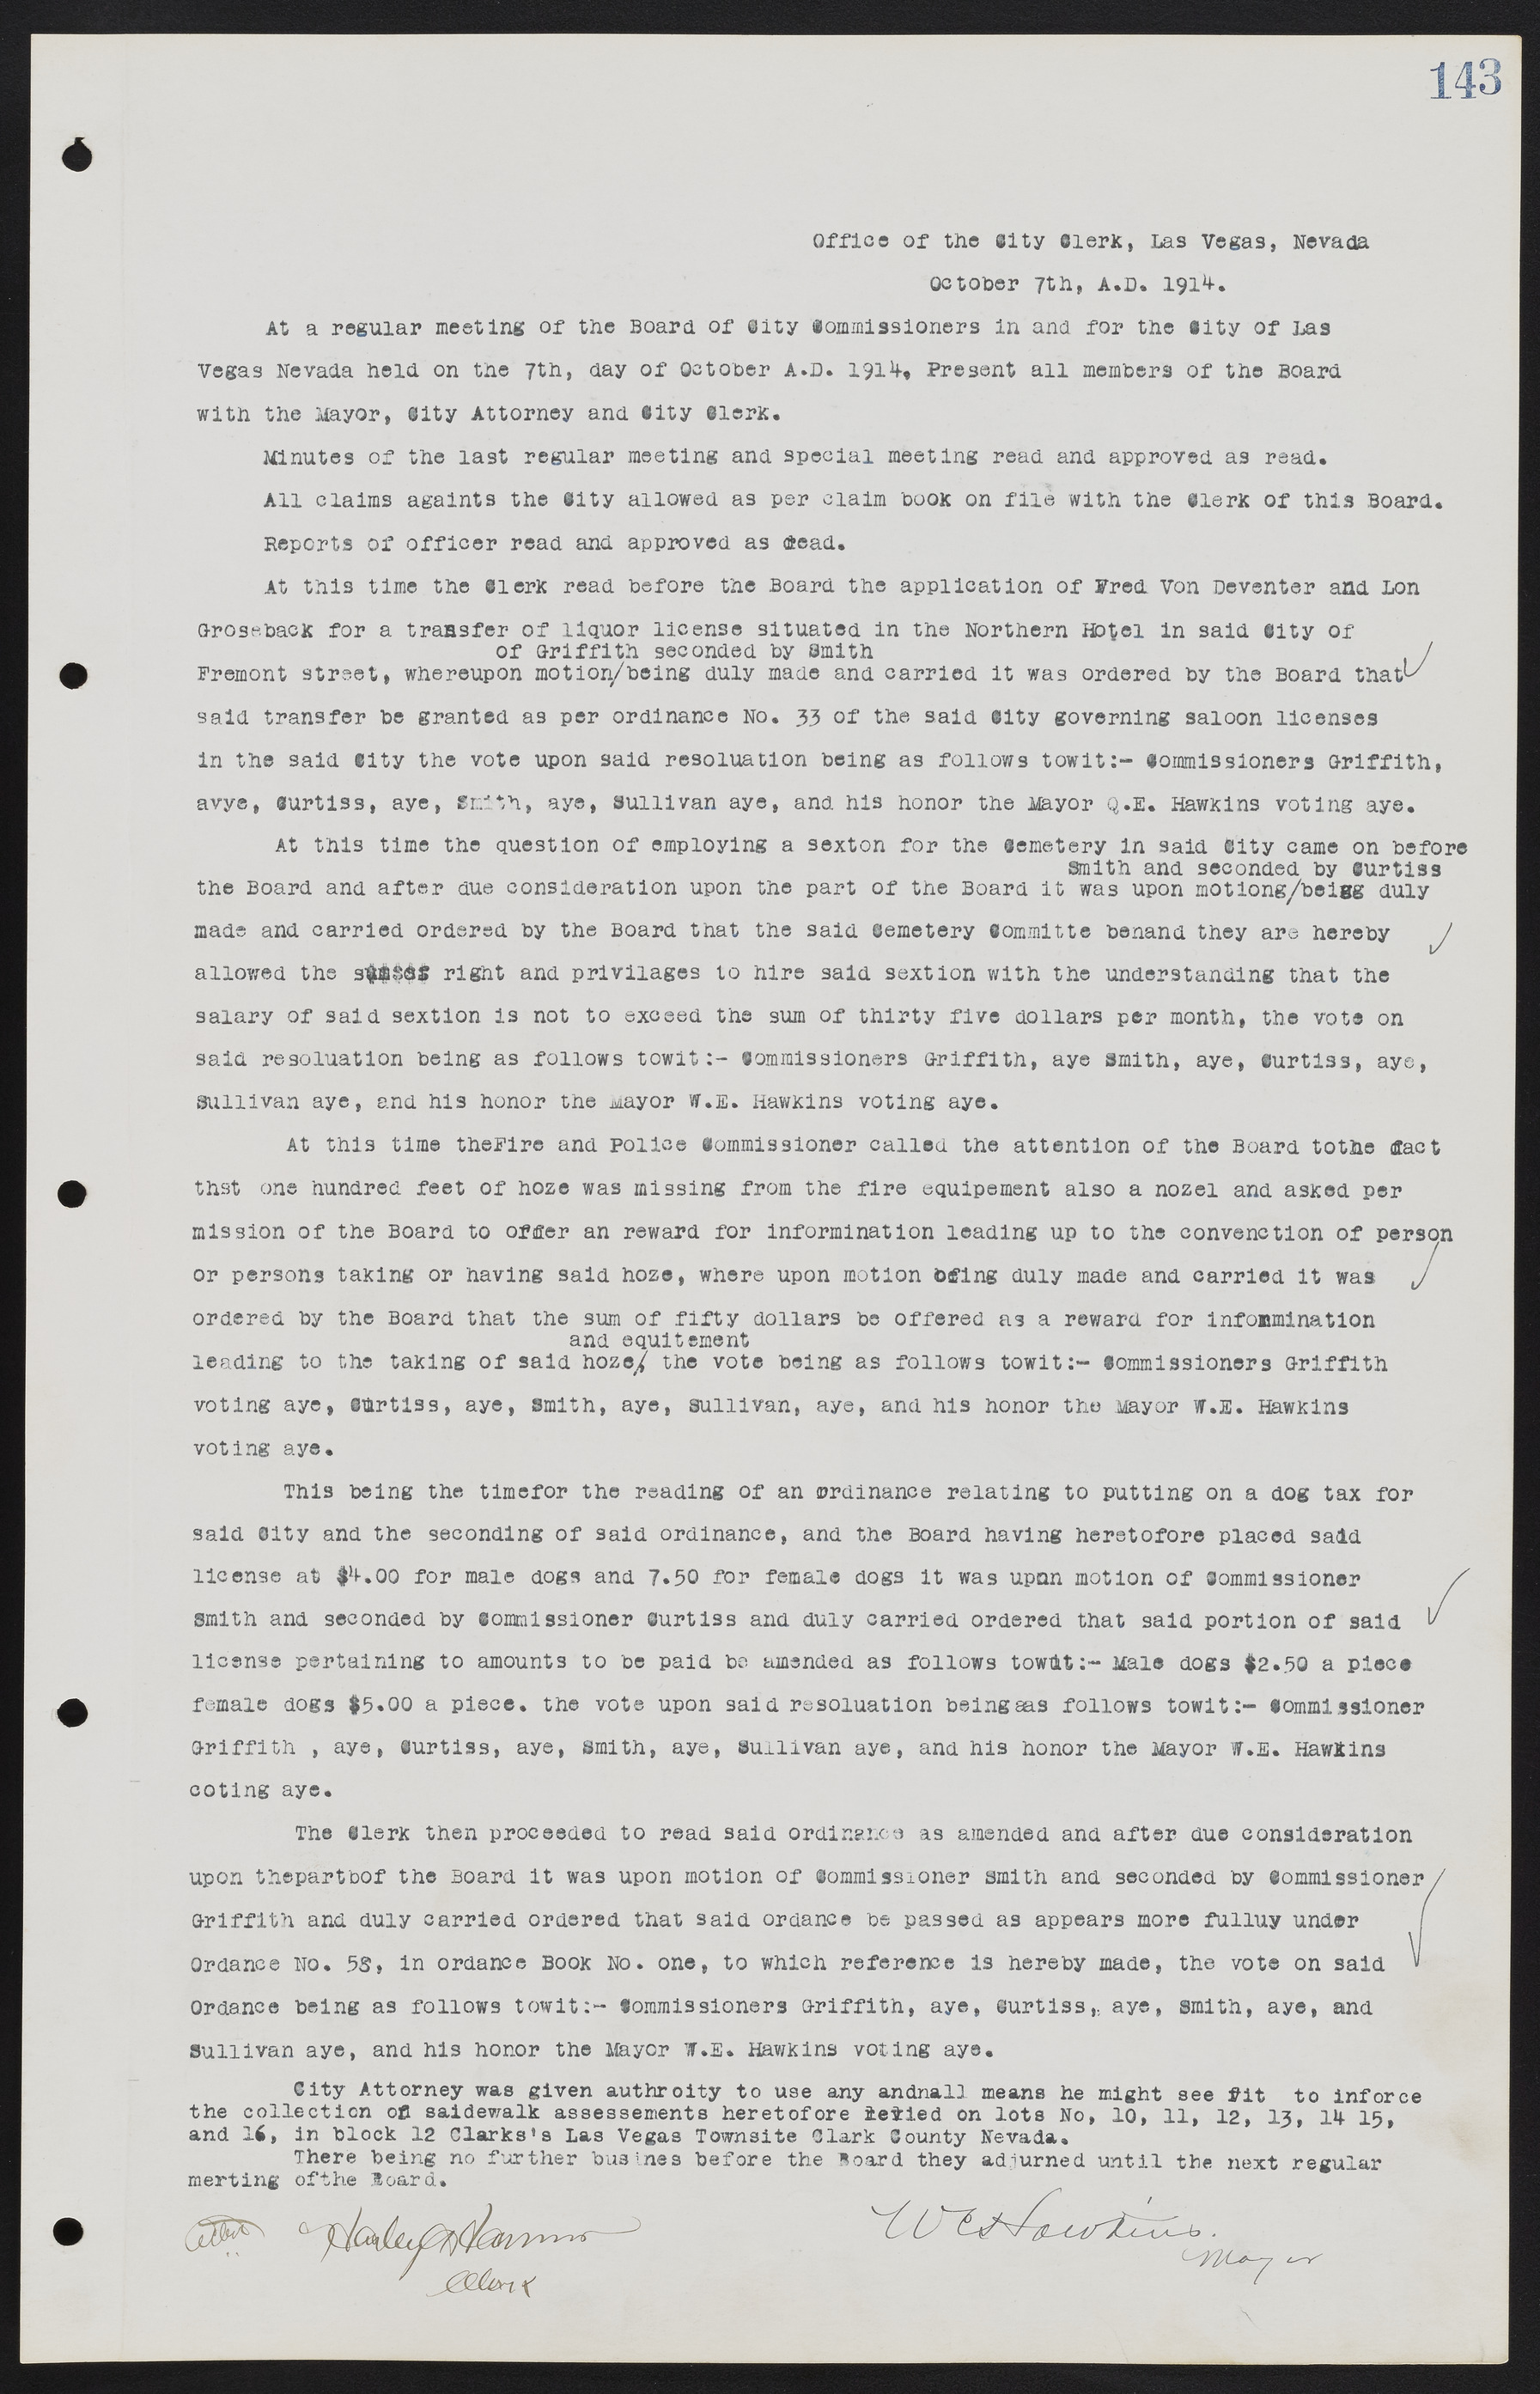 Las Vegas City Commission Minutes, June 22, 1911 to February 7, 1922, lvc000001-159